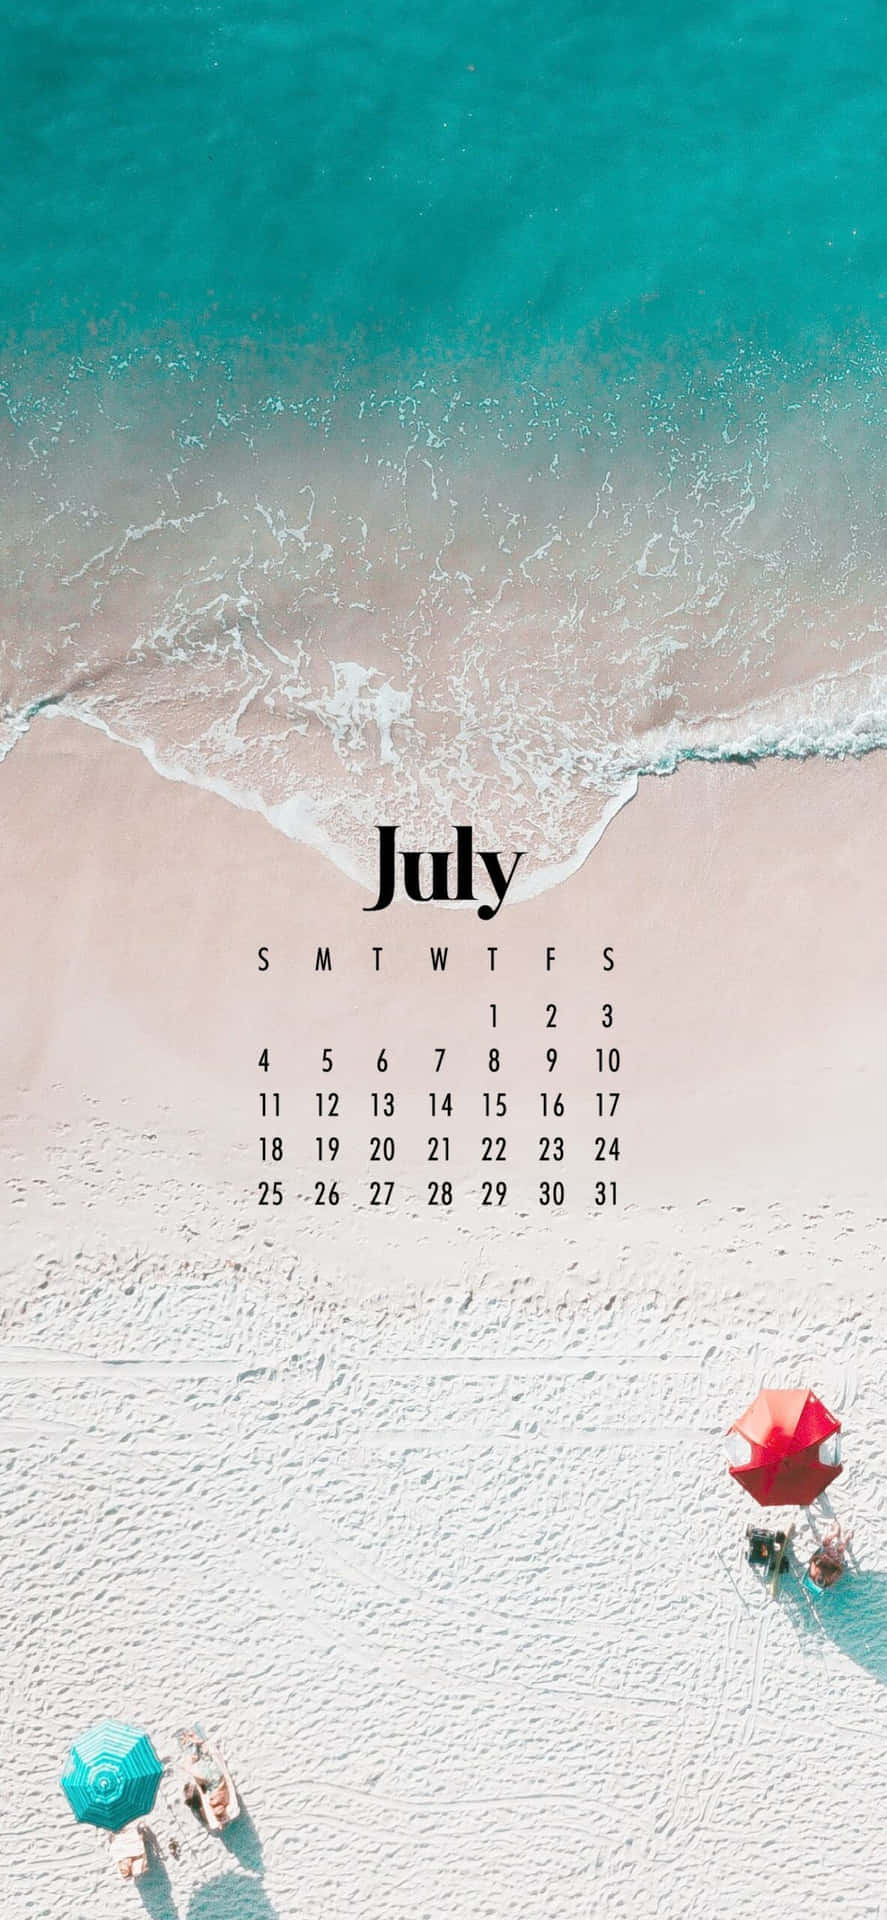 July Beach Calendar Aesthetic.jpg Wallpaper